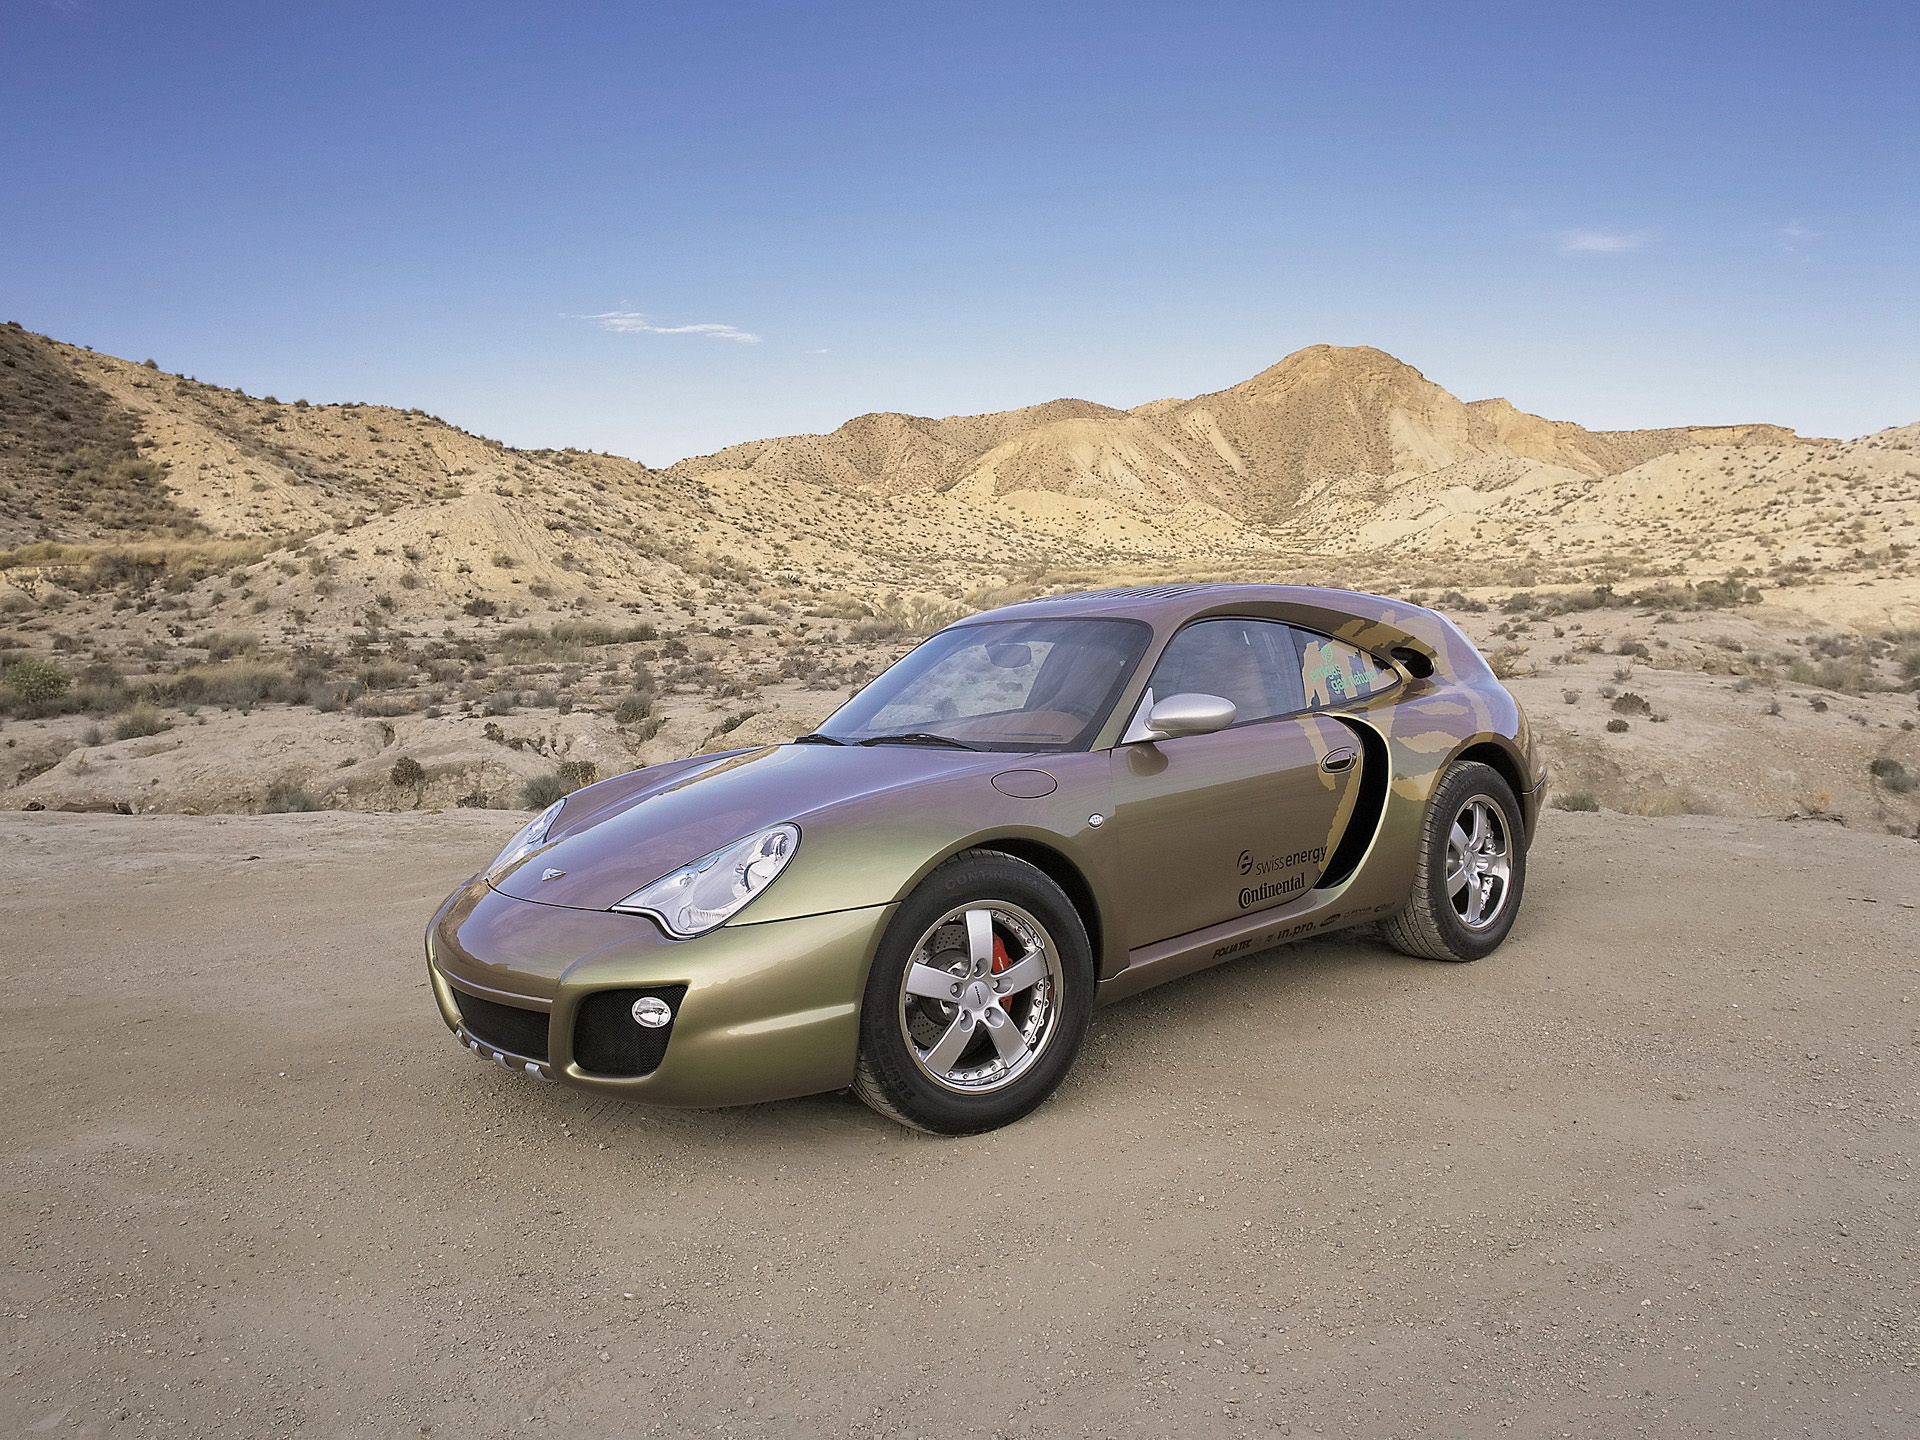 2003, Rinspeed, Porsche, Bedouin, 996, Turbo, Concept, Supercar, Pickup, Truck Wallpaper